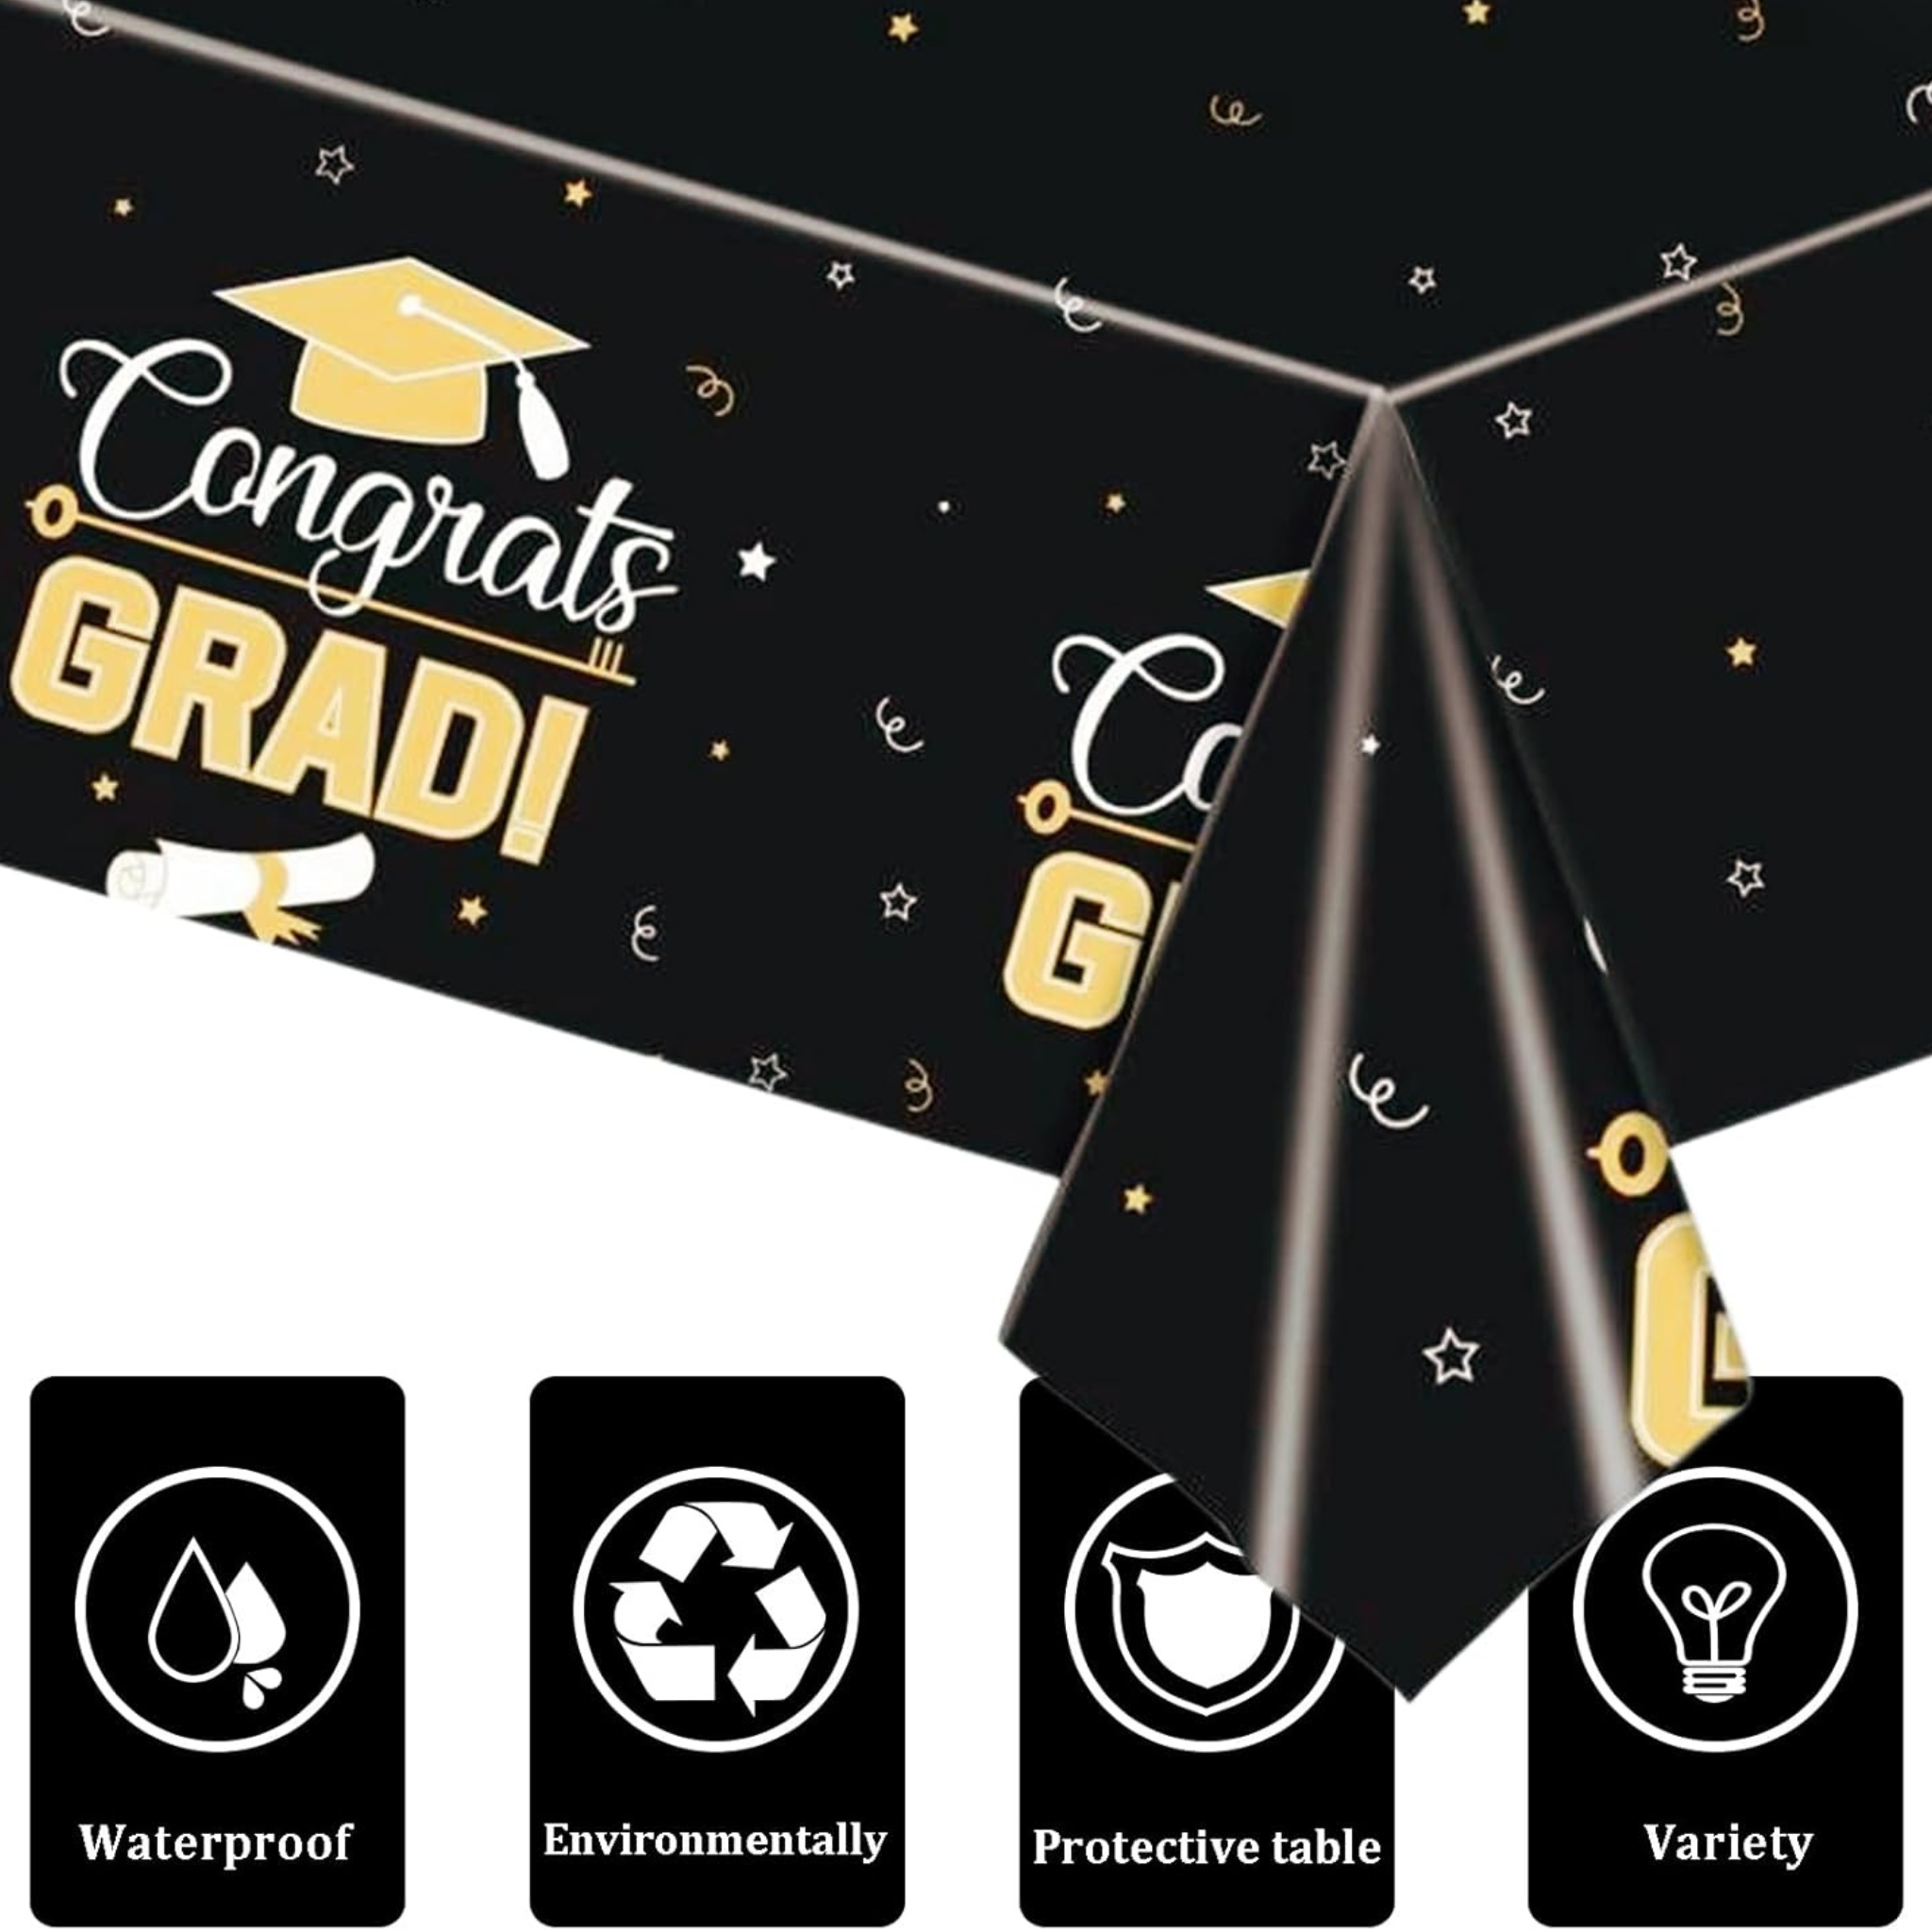 Graduation Theme Table Cover